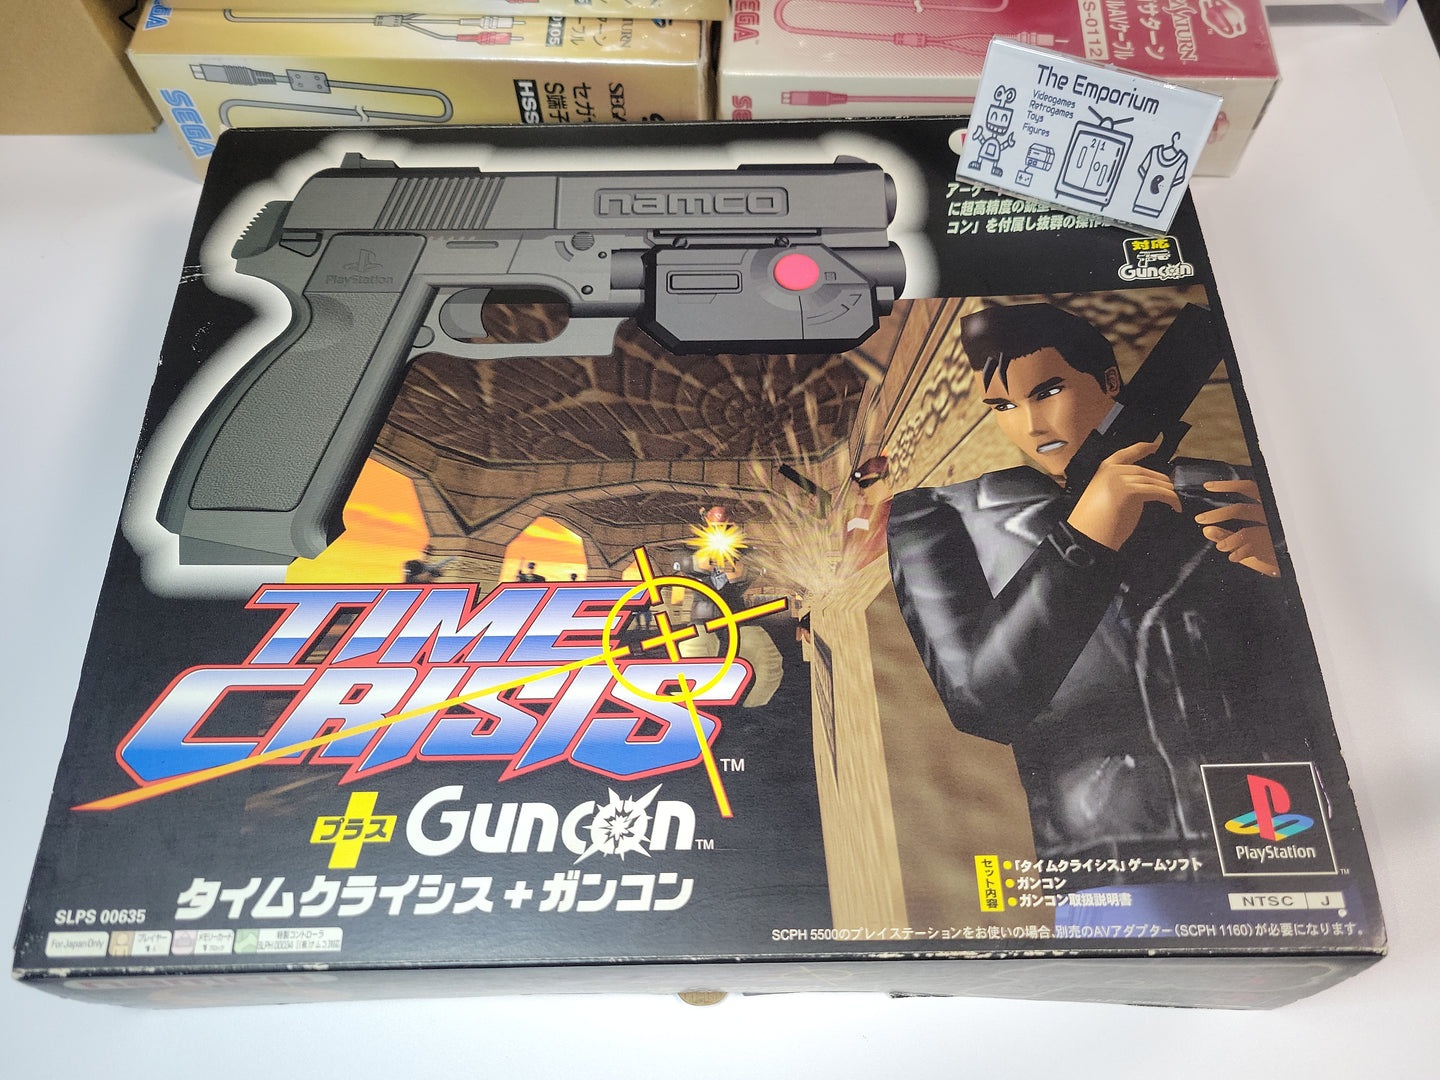 davide - Time Crisis gunset + GunBullet + GunBalina + Gunbarl - Sony PS1 Playstation